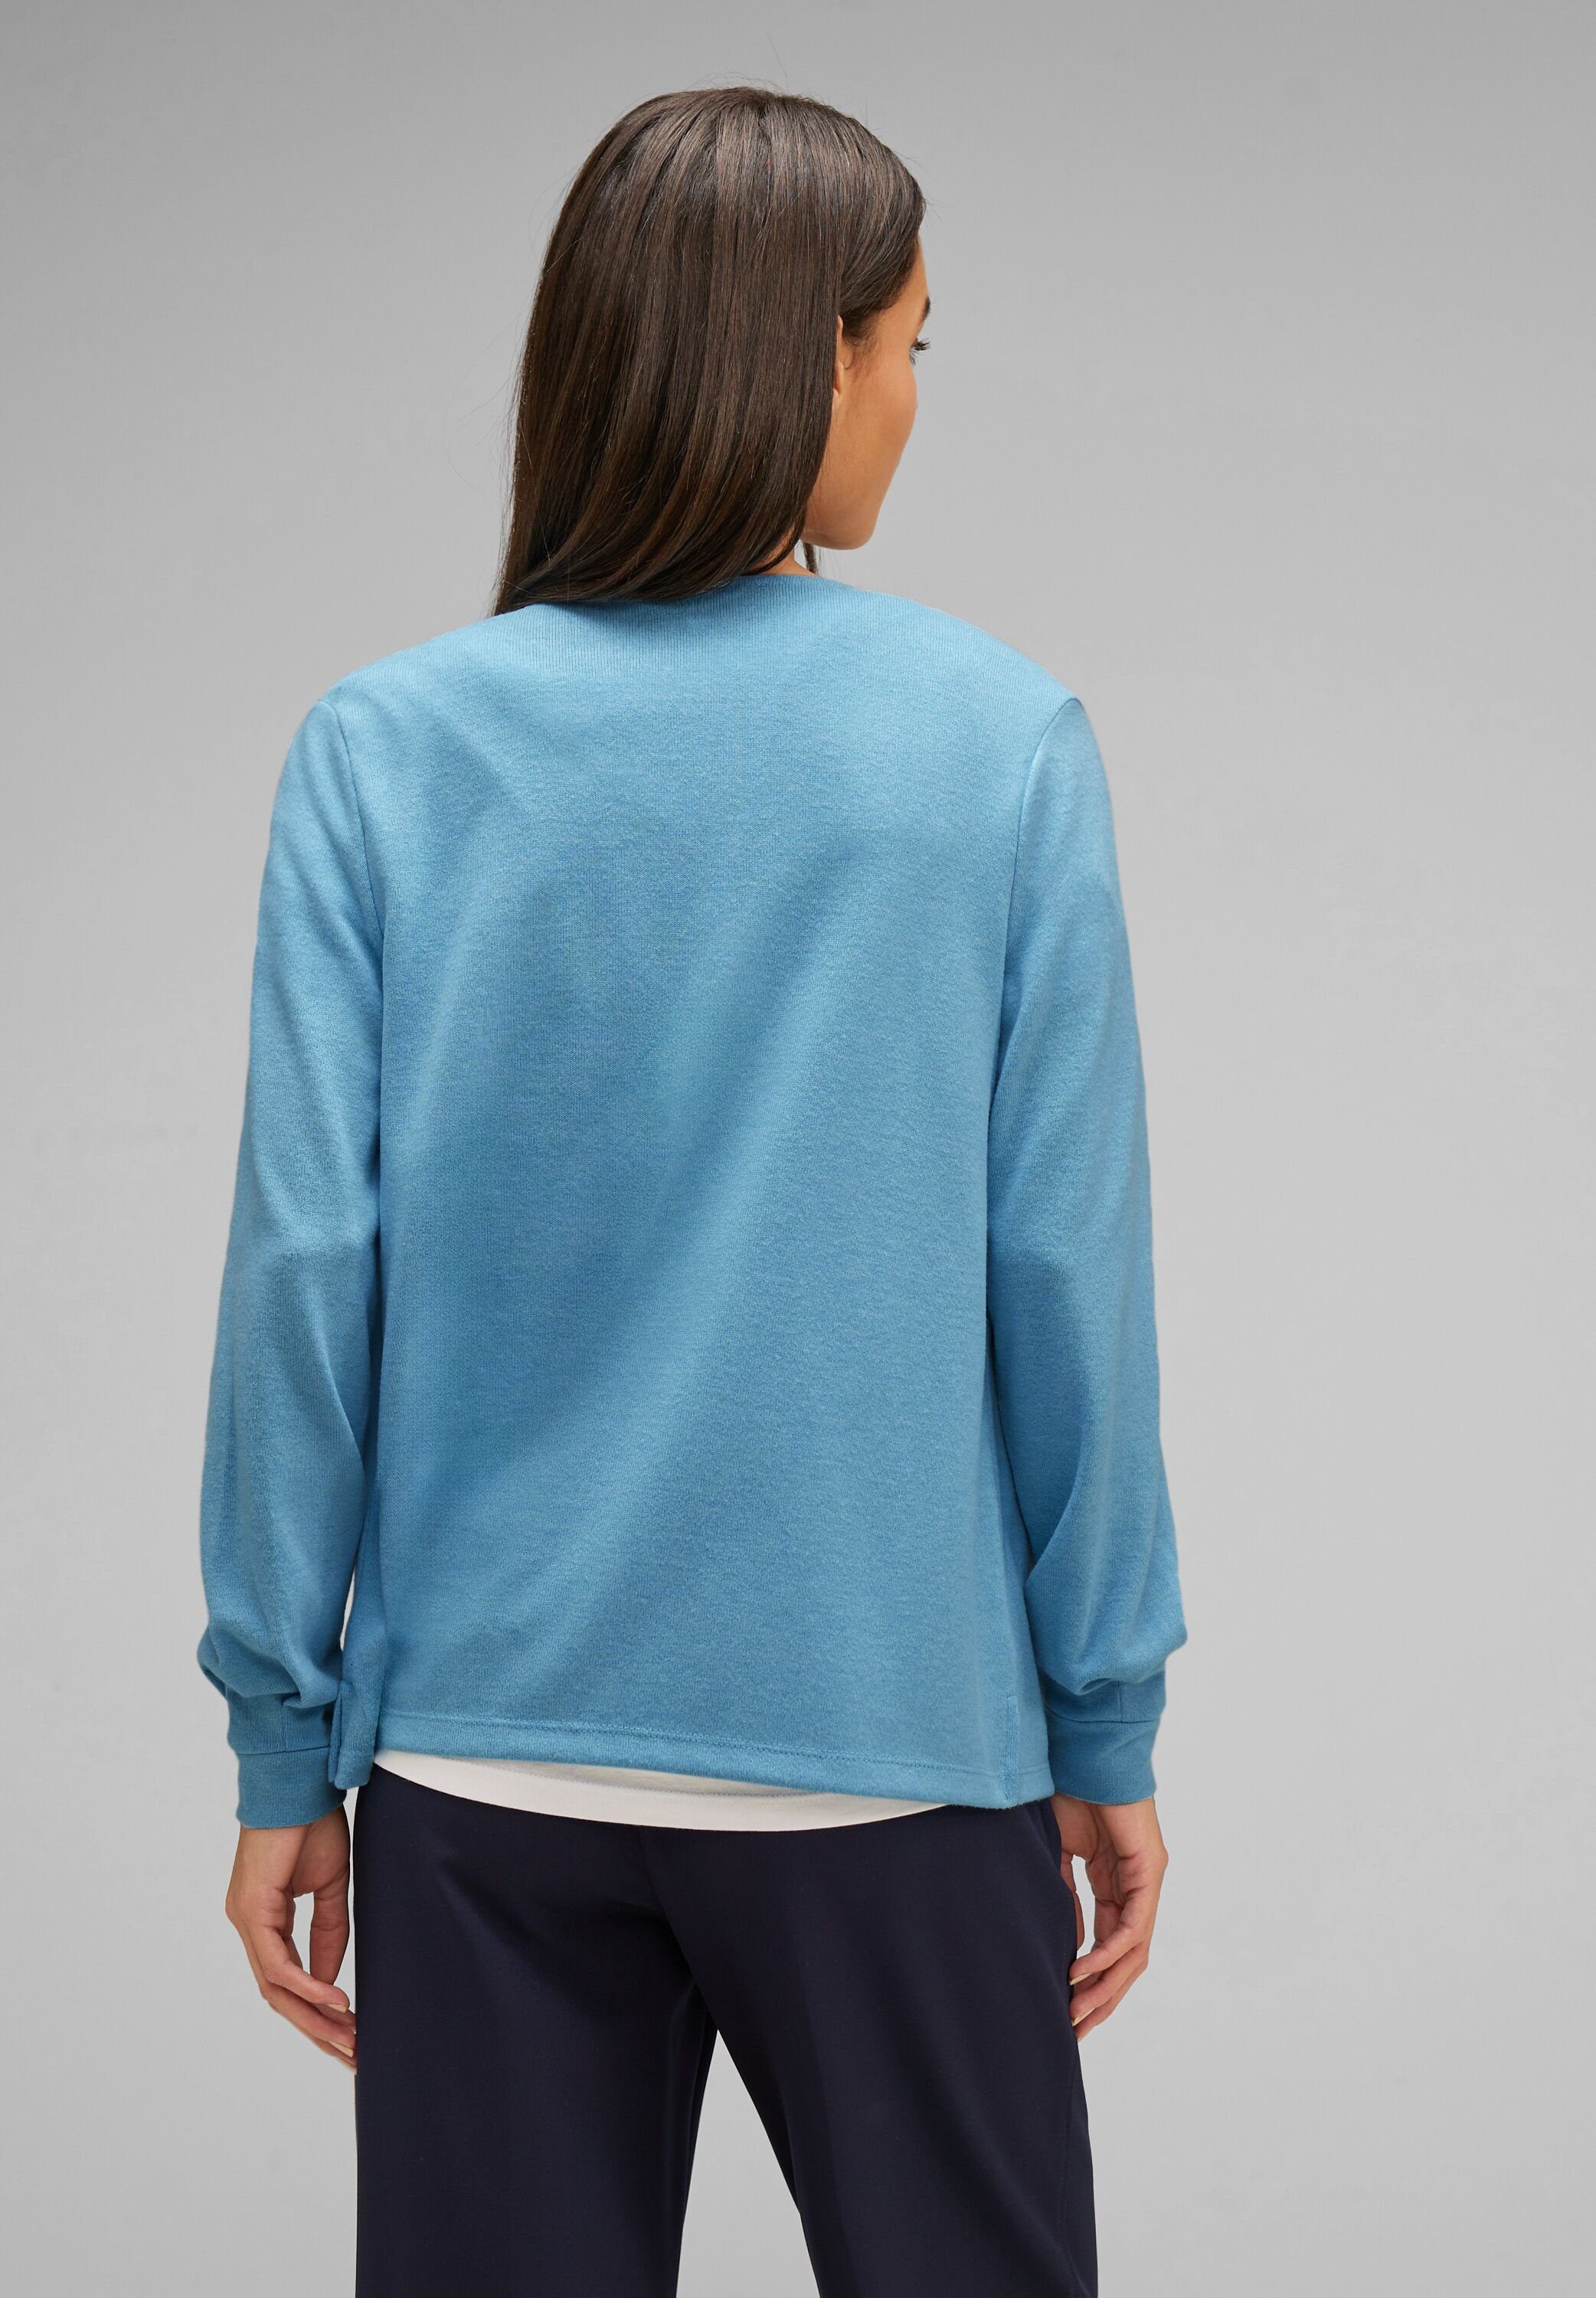 STREET ONE new Shirtjacke QR light Style im LTD blue aquamarine offenen Jacy mel. Design Shirtjacke